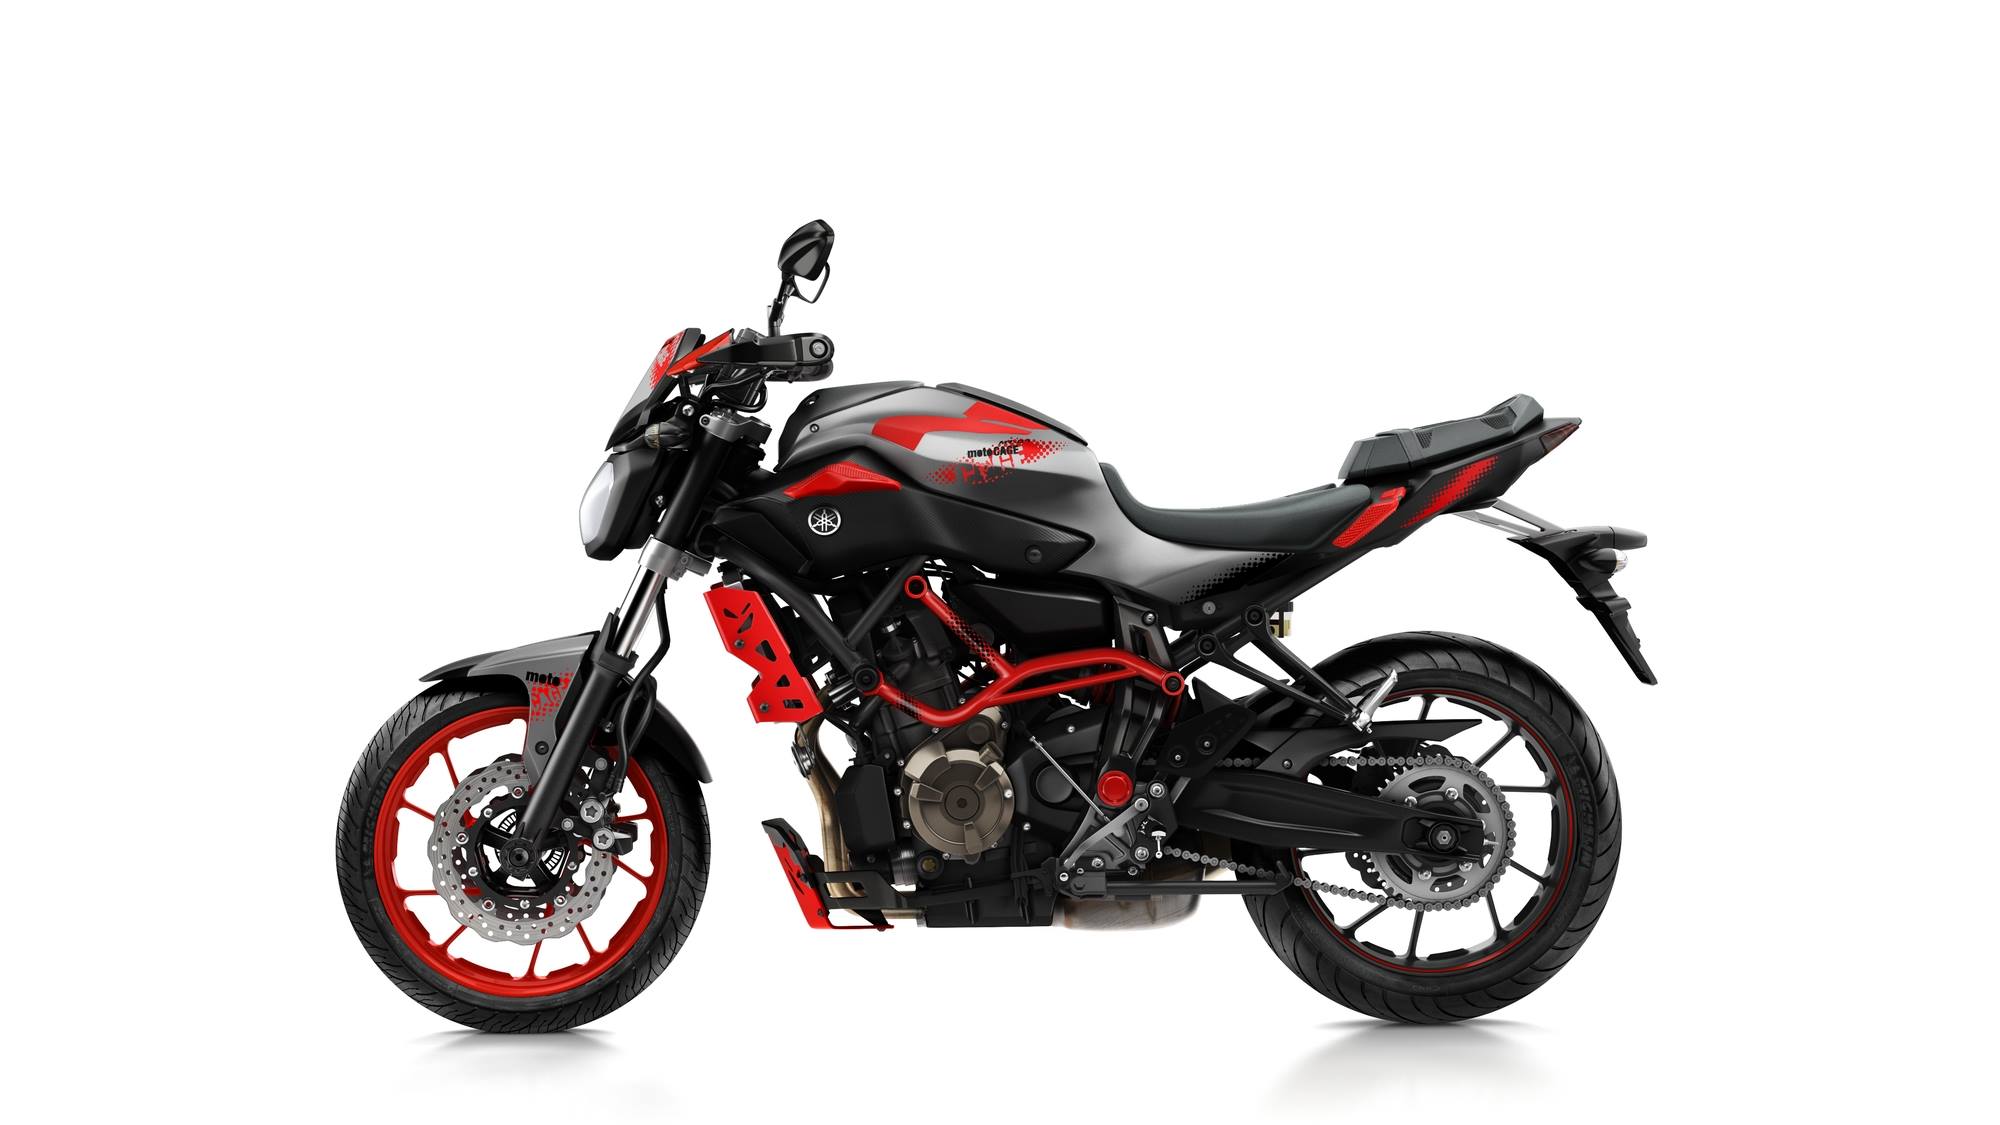 Intermot 2014: Yamaha release MT-07 ‘Moto Cage’ edition